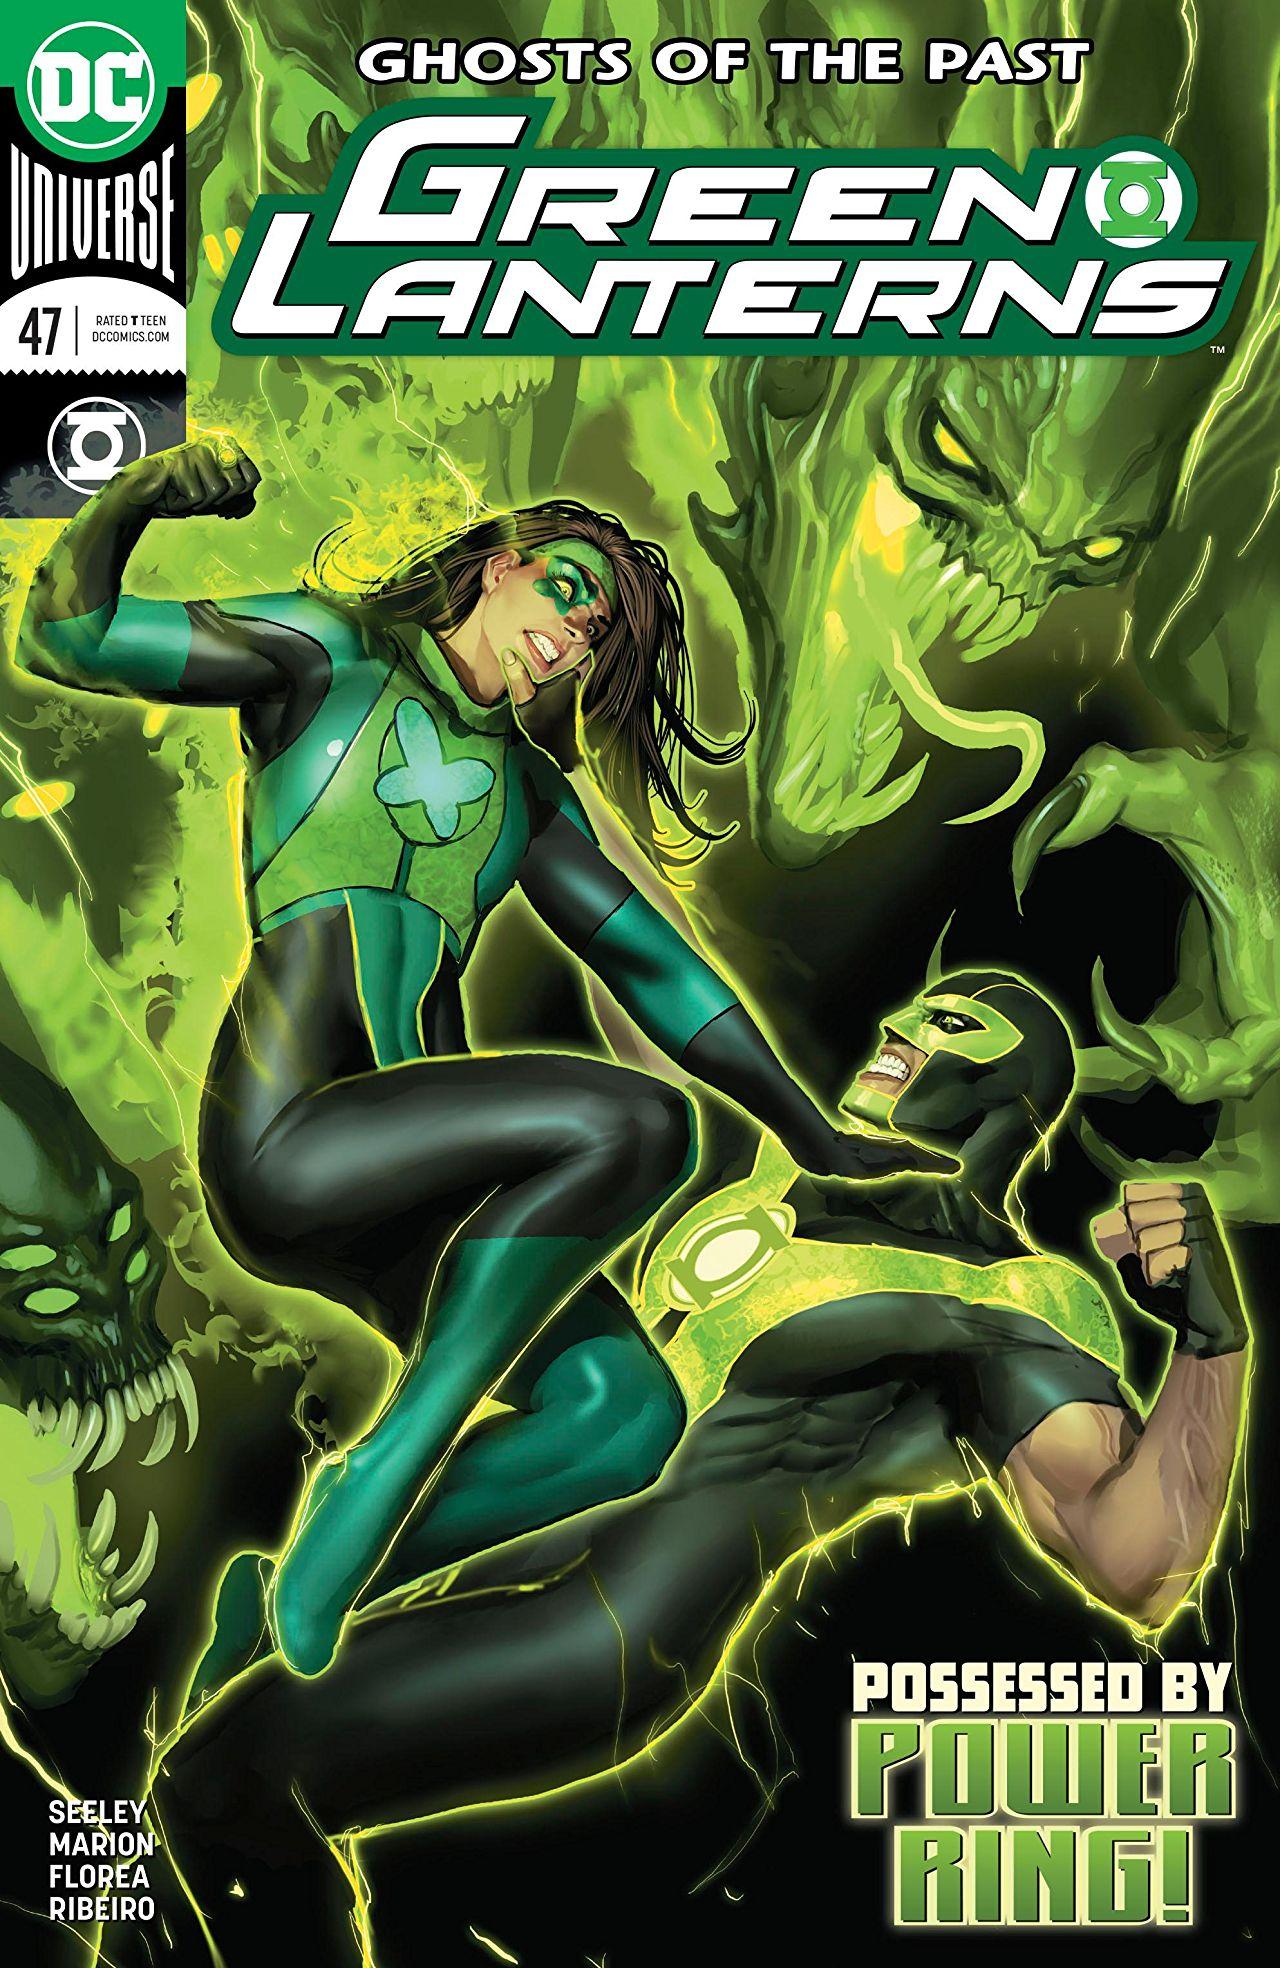 Green Lanterns Vol. 1 #47